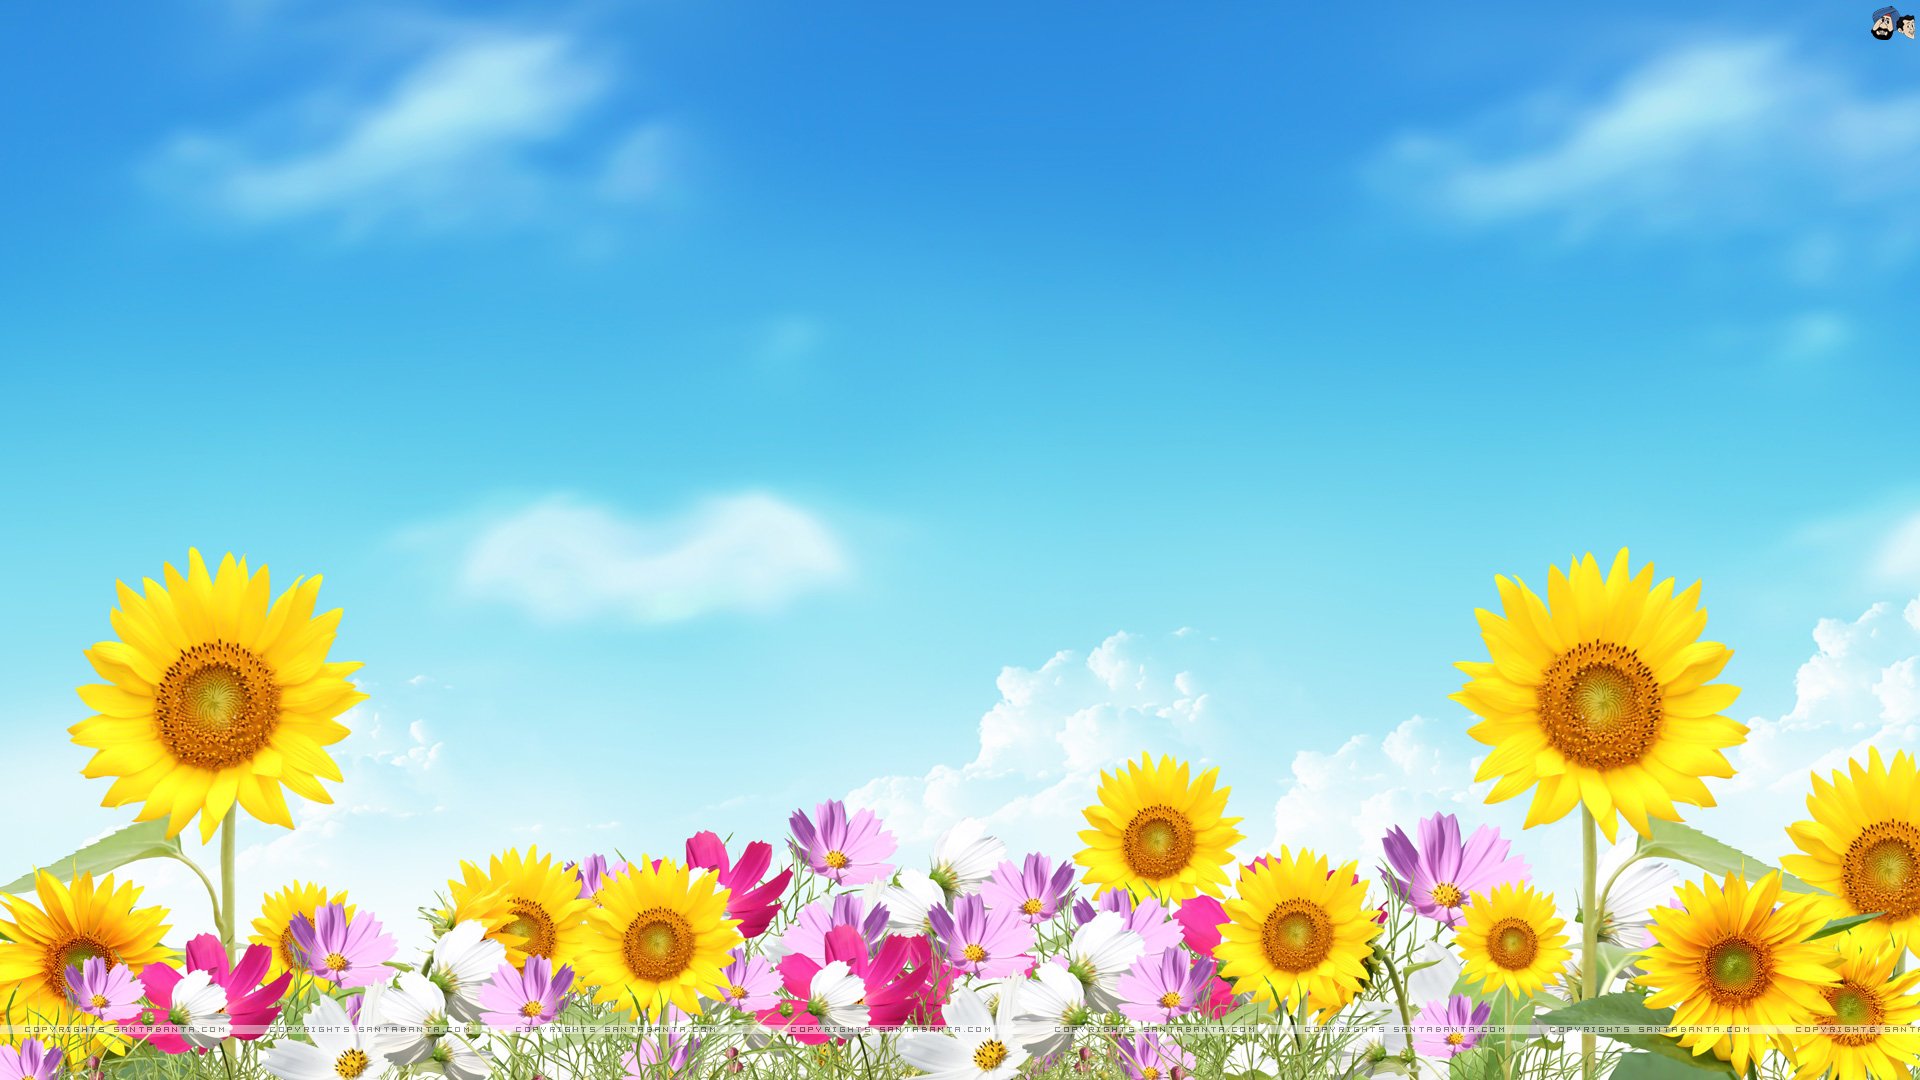 Free download Sunflower Daisy Cosmos Digital Art 1920x1080 [1920x1080] for your Desktop, Mobile & Tablet. Explore Wallpaper Summer. Summer Wallpaper Background, Free Summer Wallpaper, Summer Wallpaper for My Desktop